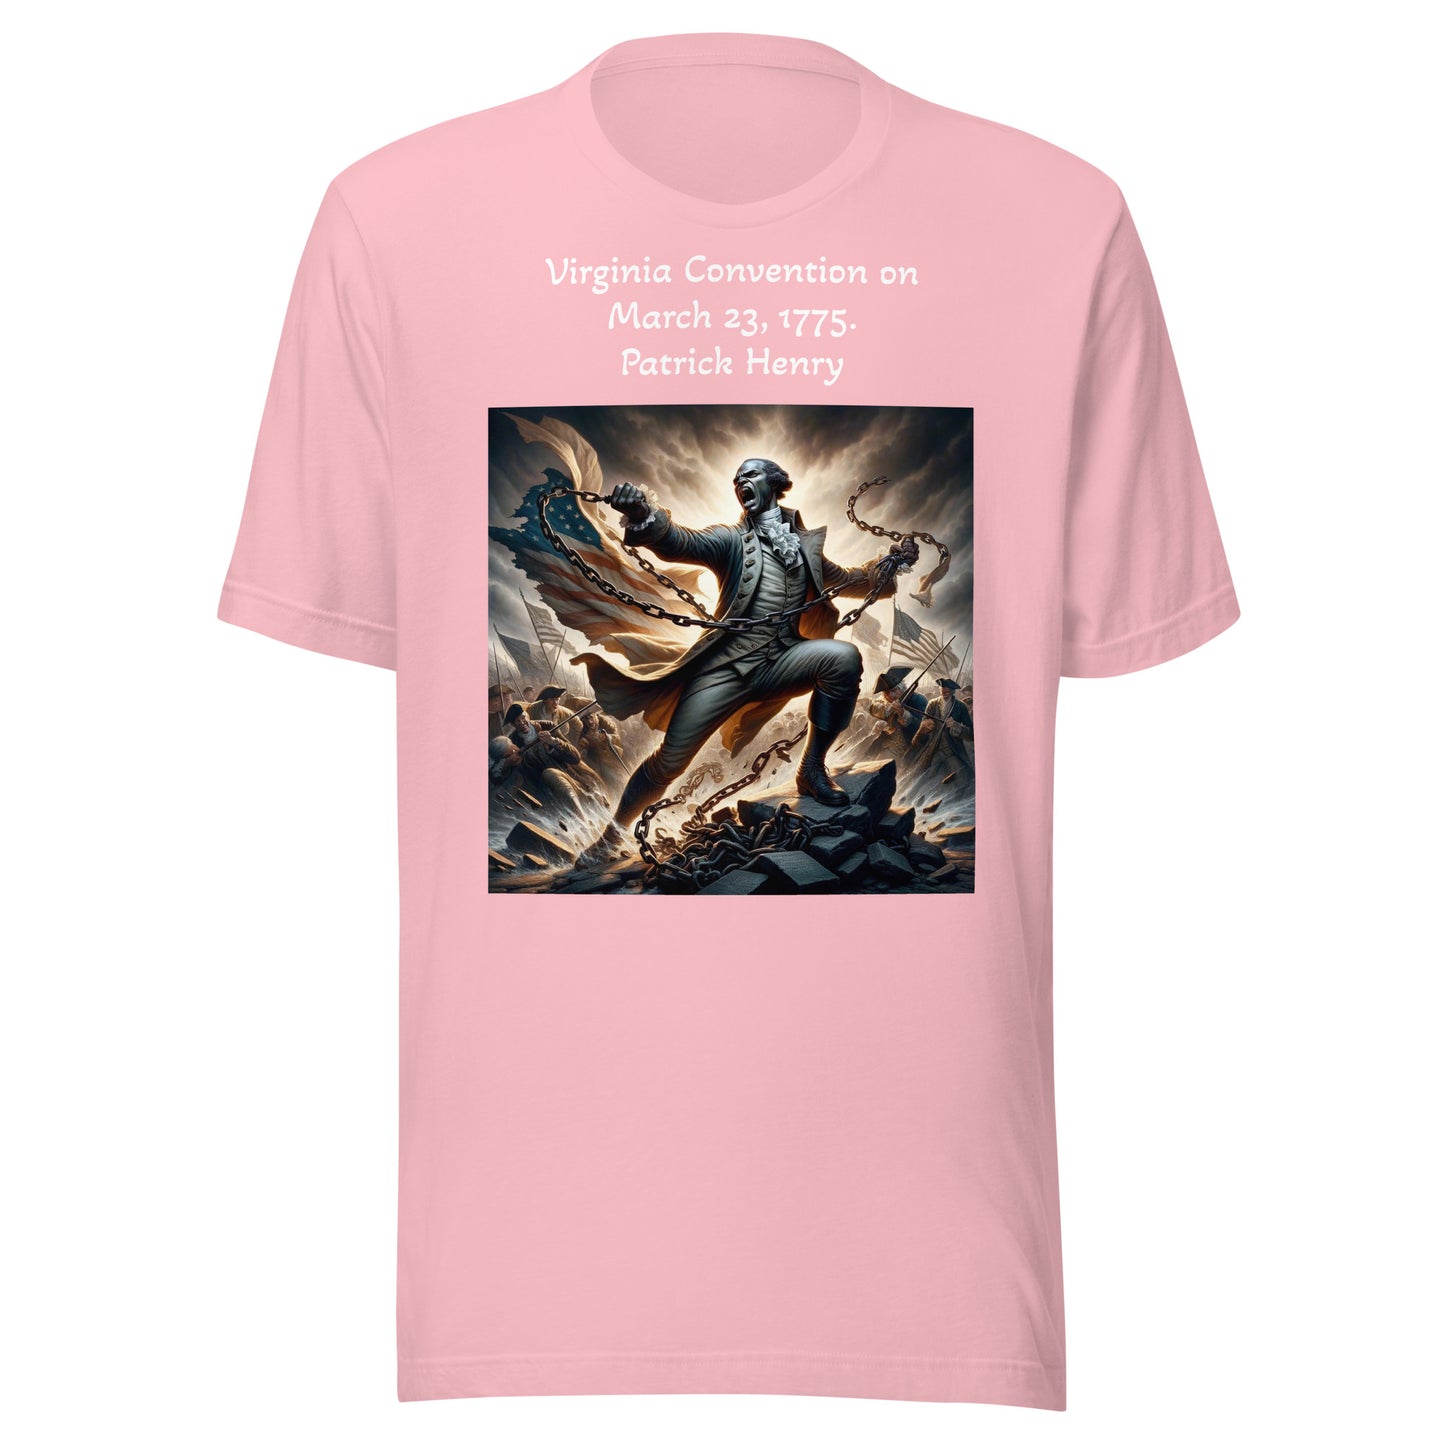 Liberty or Death Tee-Shirt